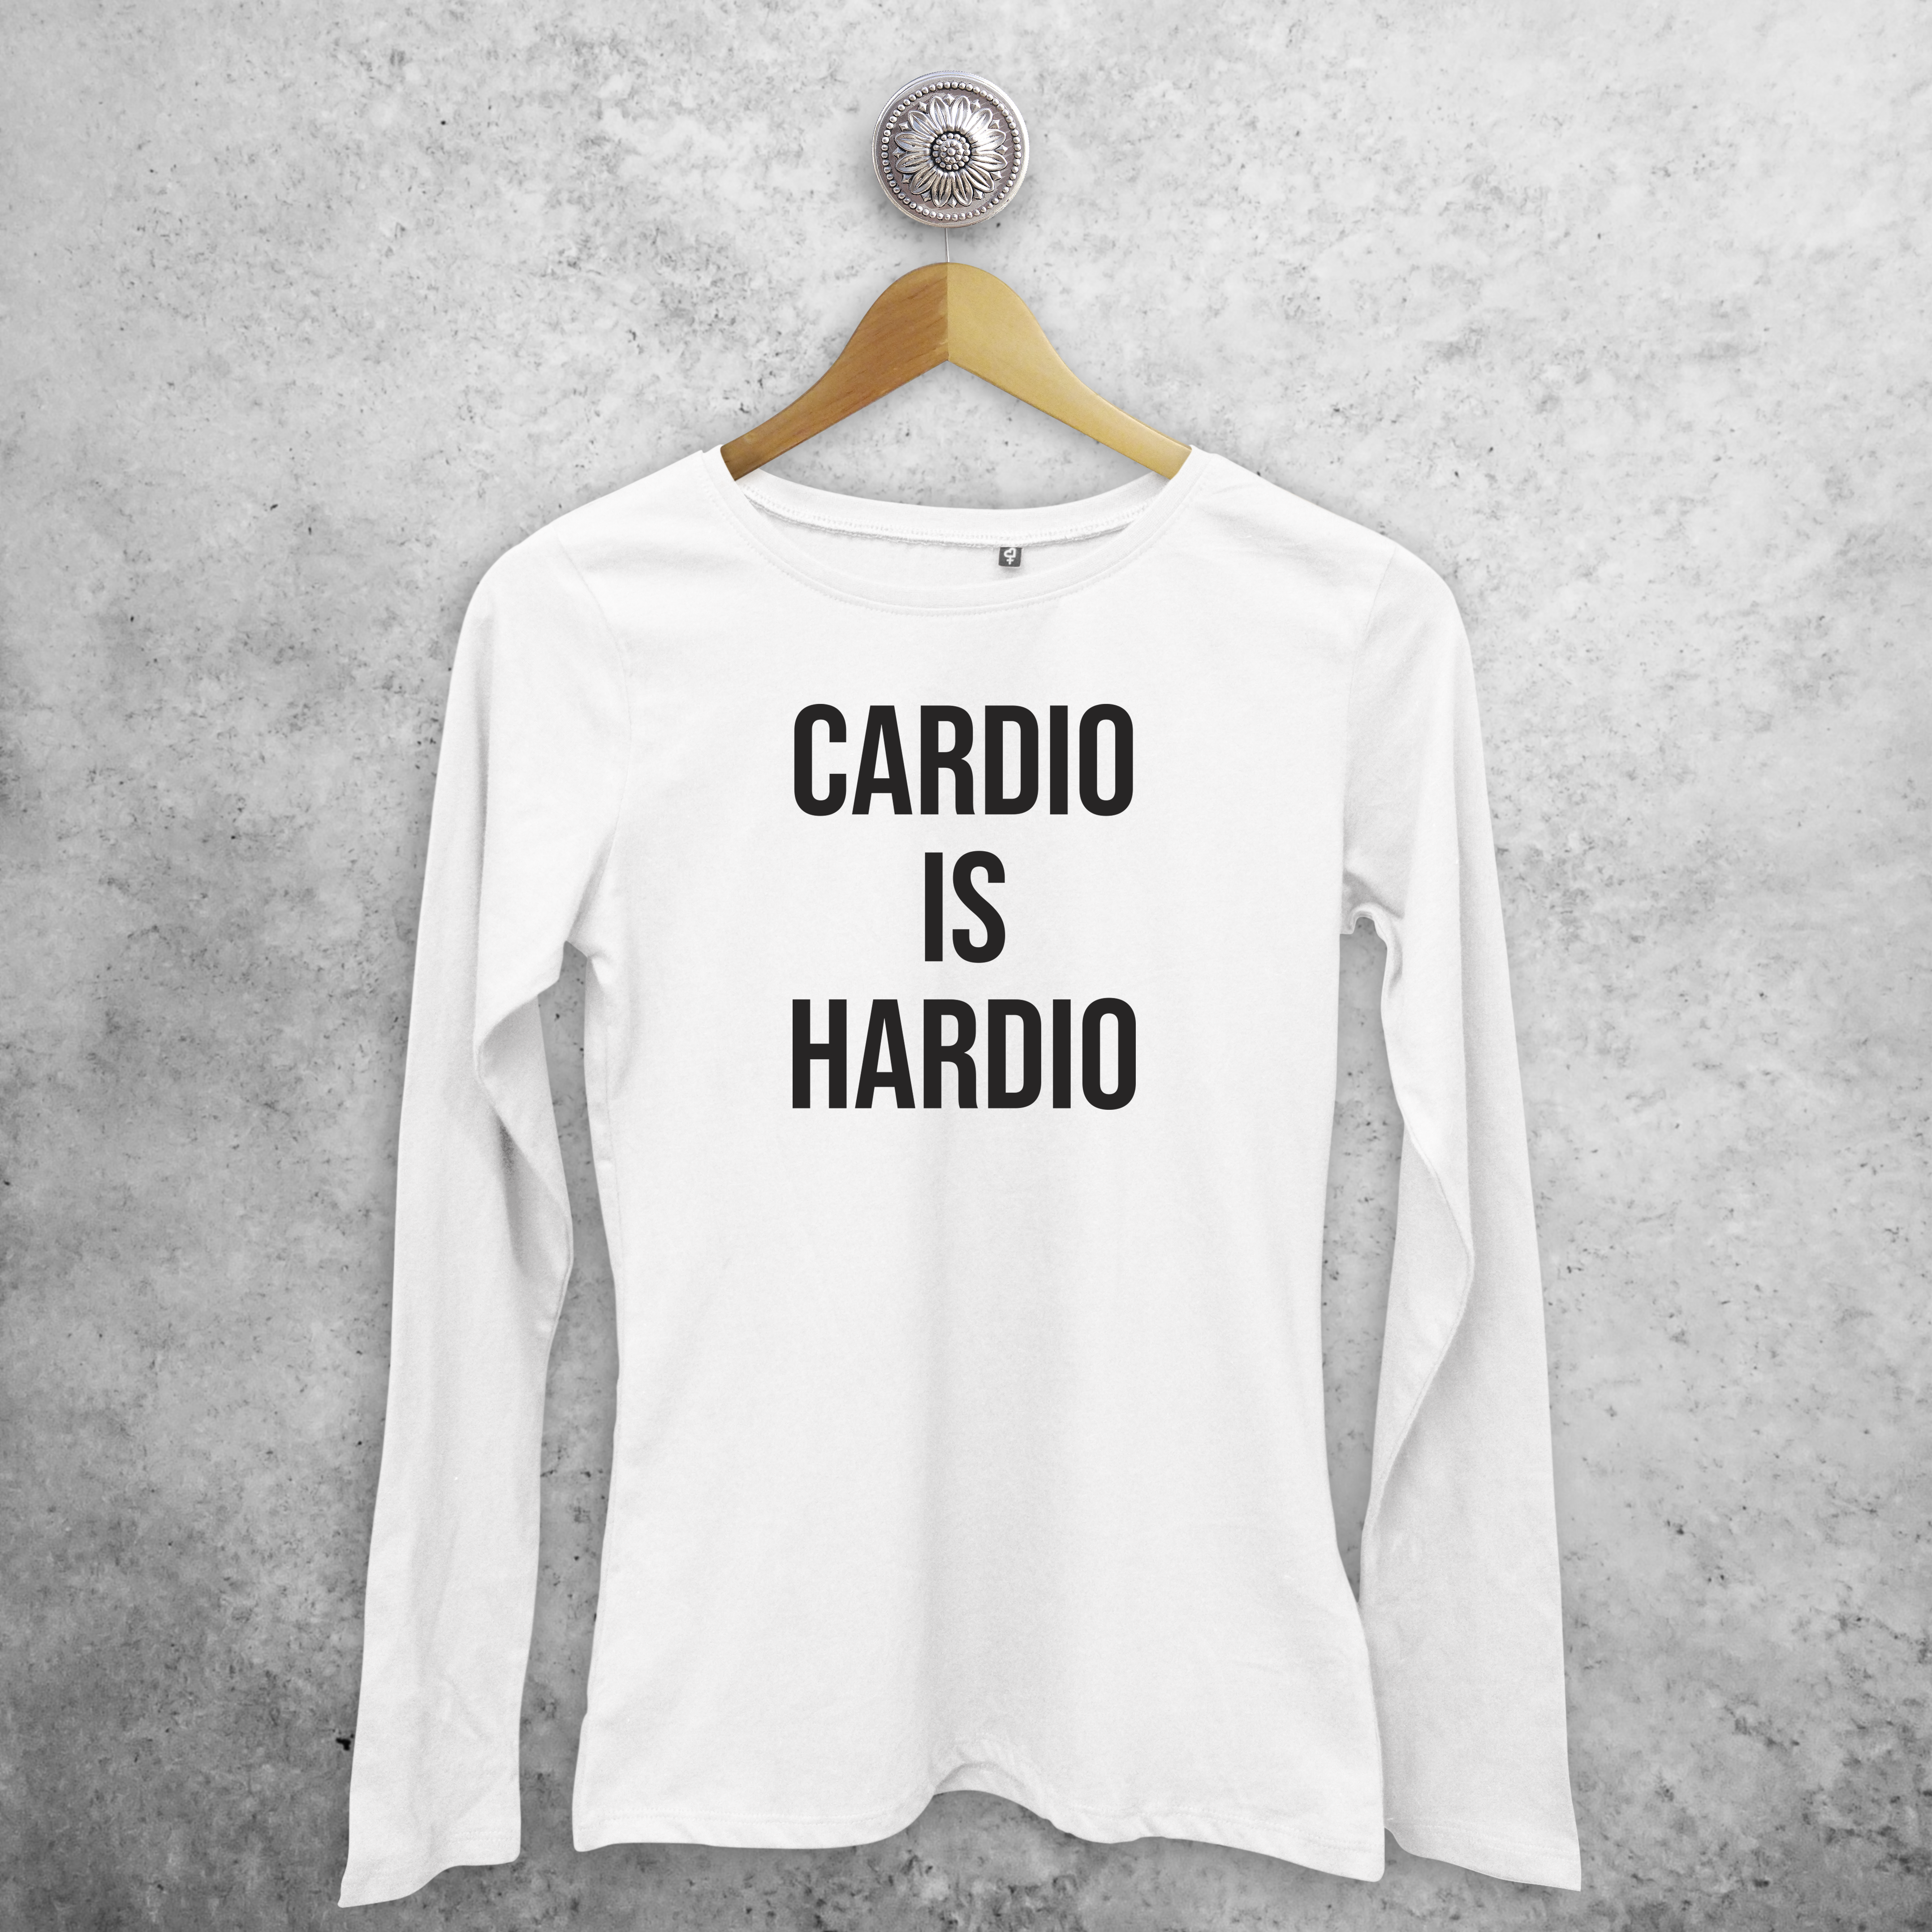 'Cardio is hardio' adult longsleeve shirt